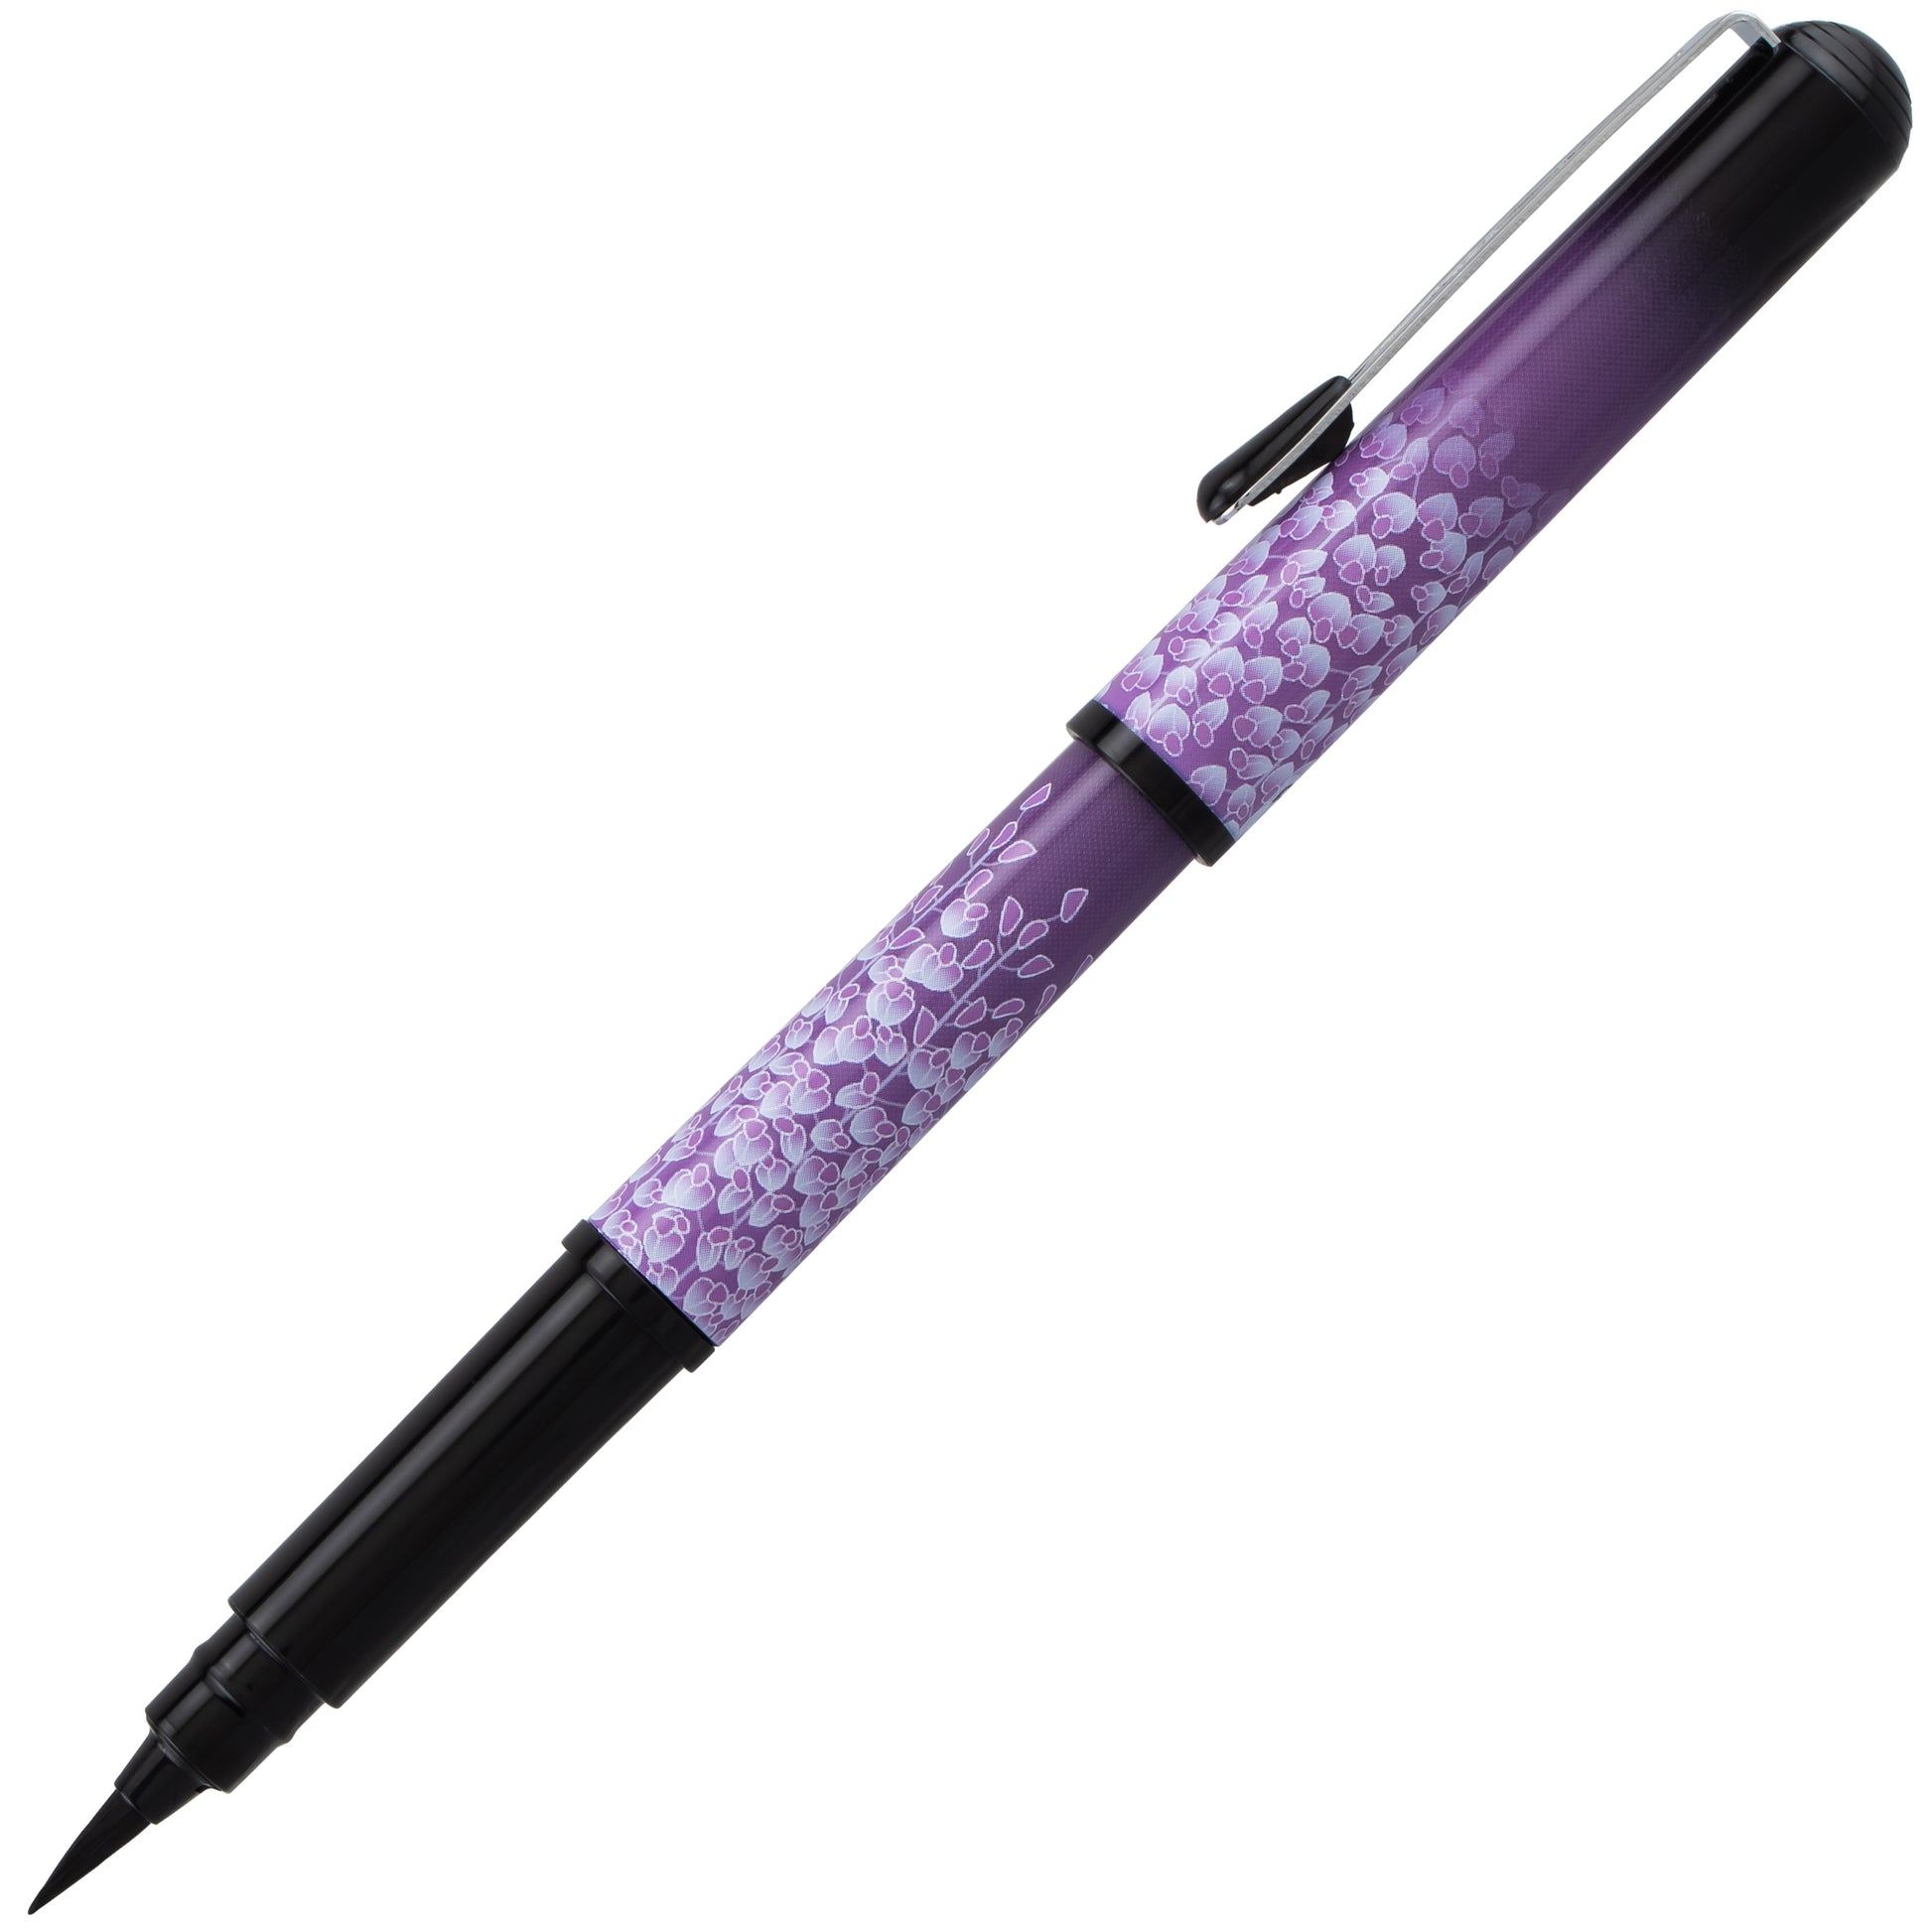 Pentel Pocket Brush Pen - Tokyo Pen Shop, pentel brush pen